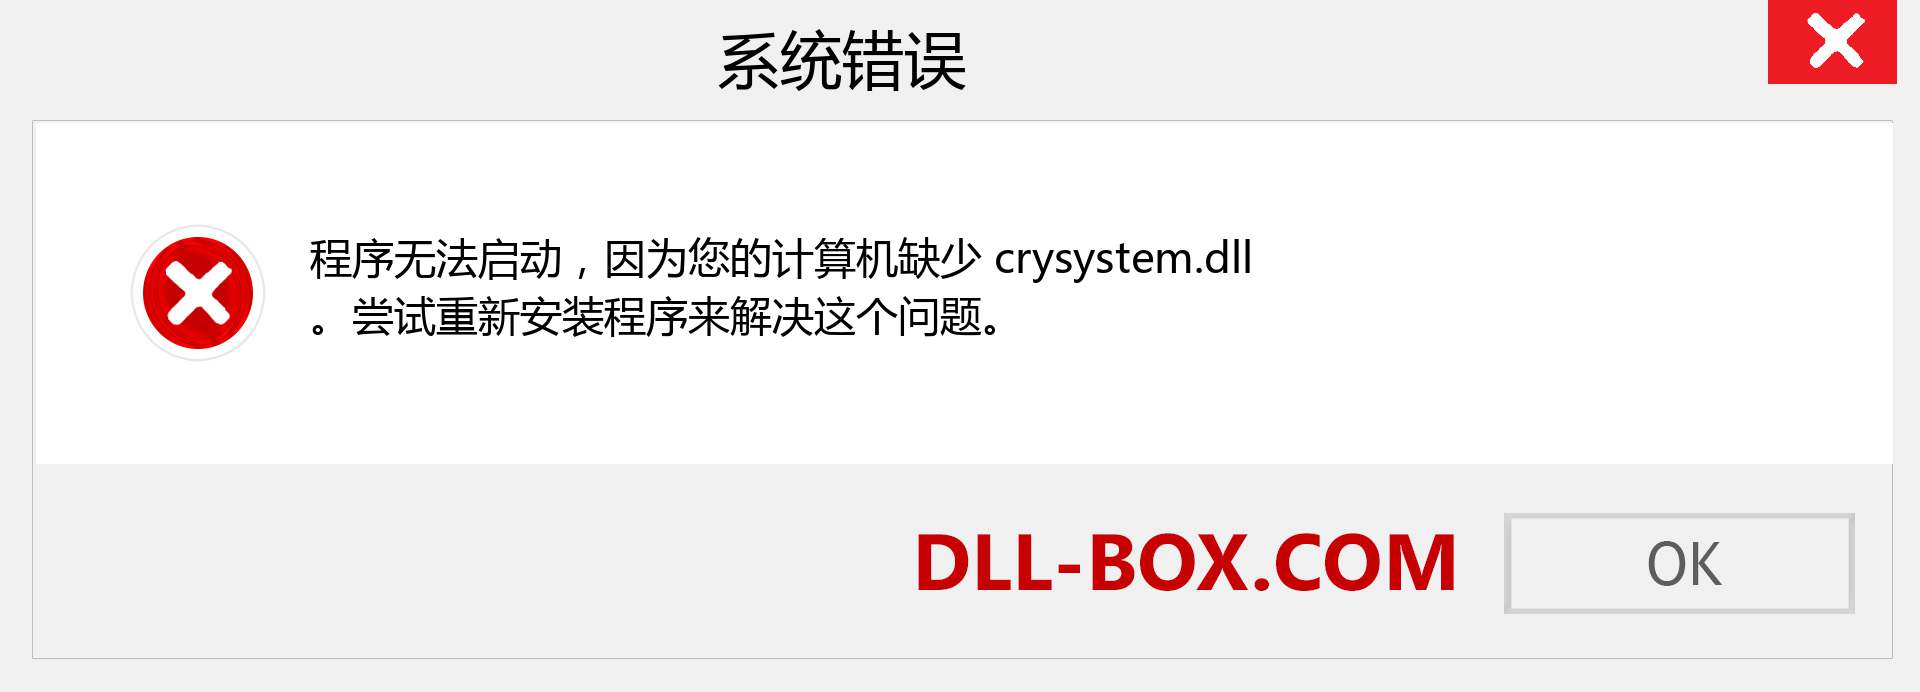 crysystem.dll 文件丢失？。 适用于 Windows 7、8、10 的下载 - 修复 Windows、照片、图像上的 crysystem dll 丢失错误